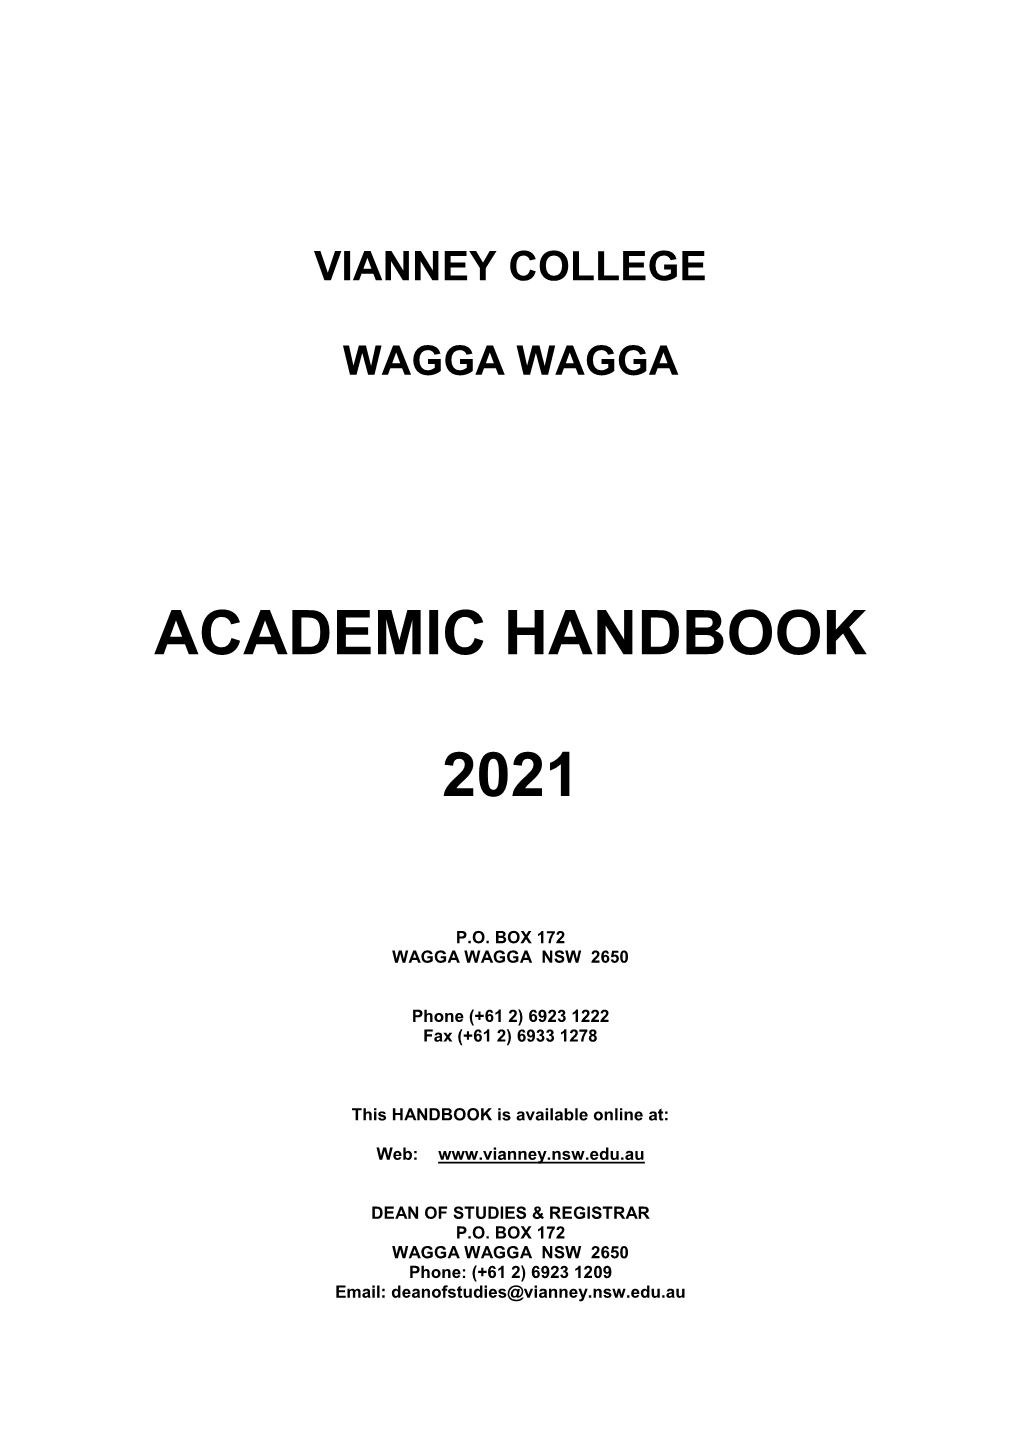 Academic Handbook 2021